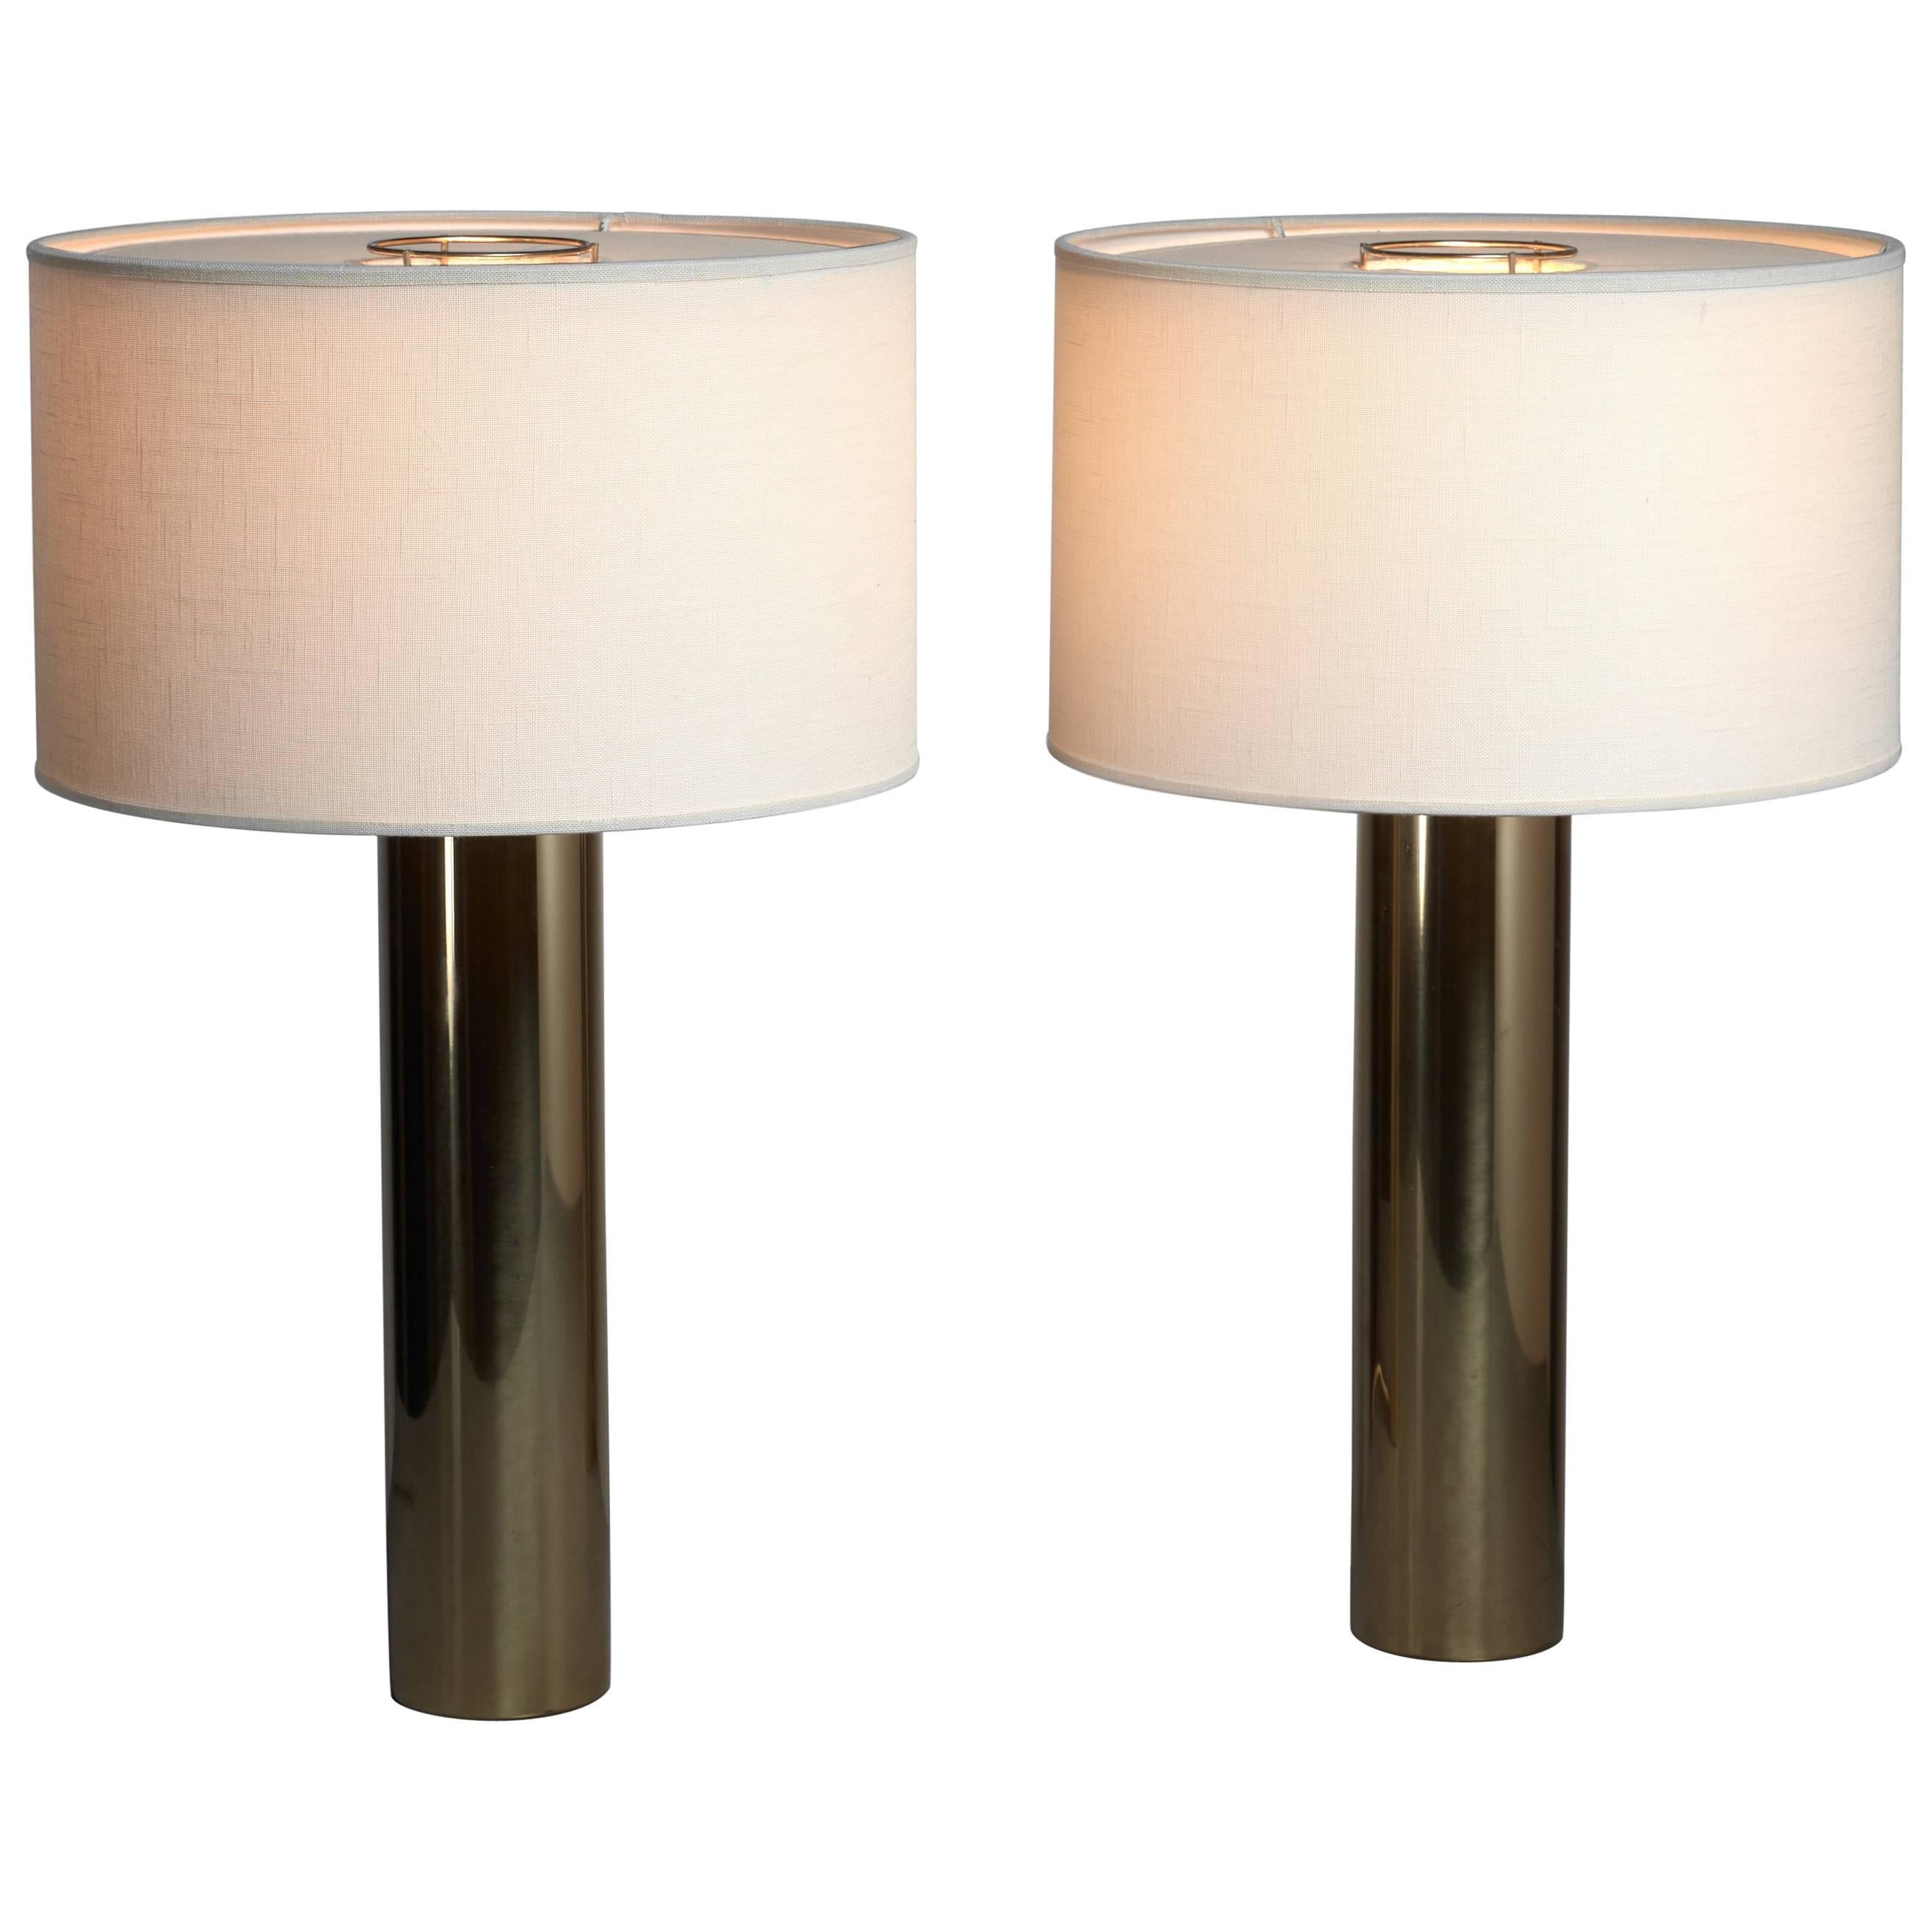 Falkenberg Brass Table Lamps, Sweden For Sale